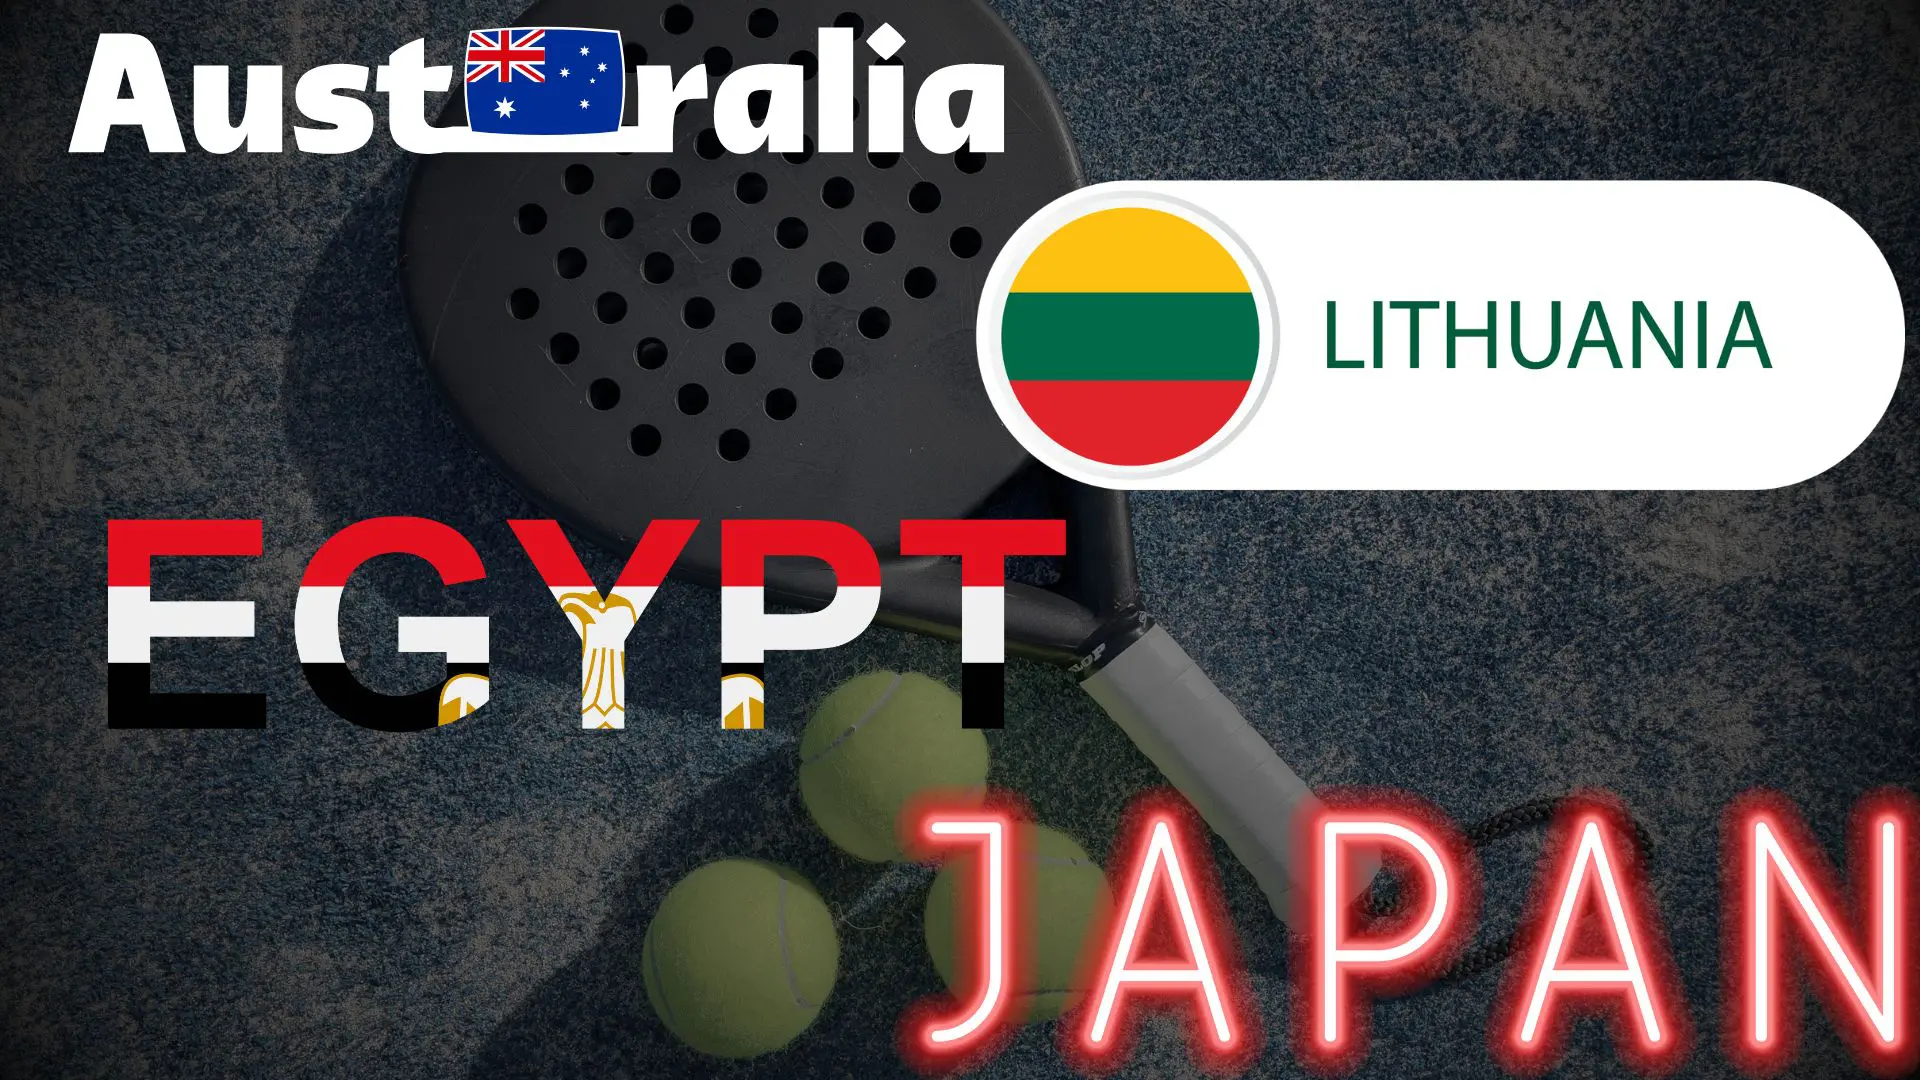 australien lutania egypten japan fip tour